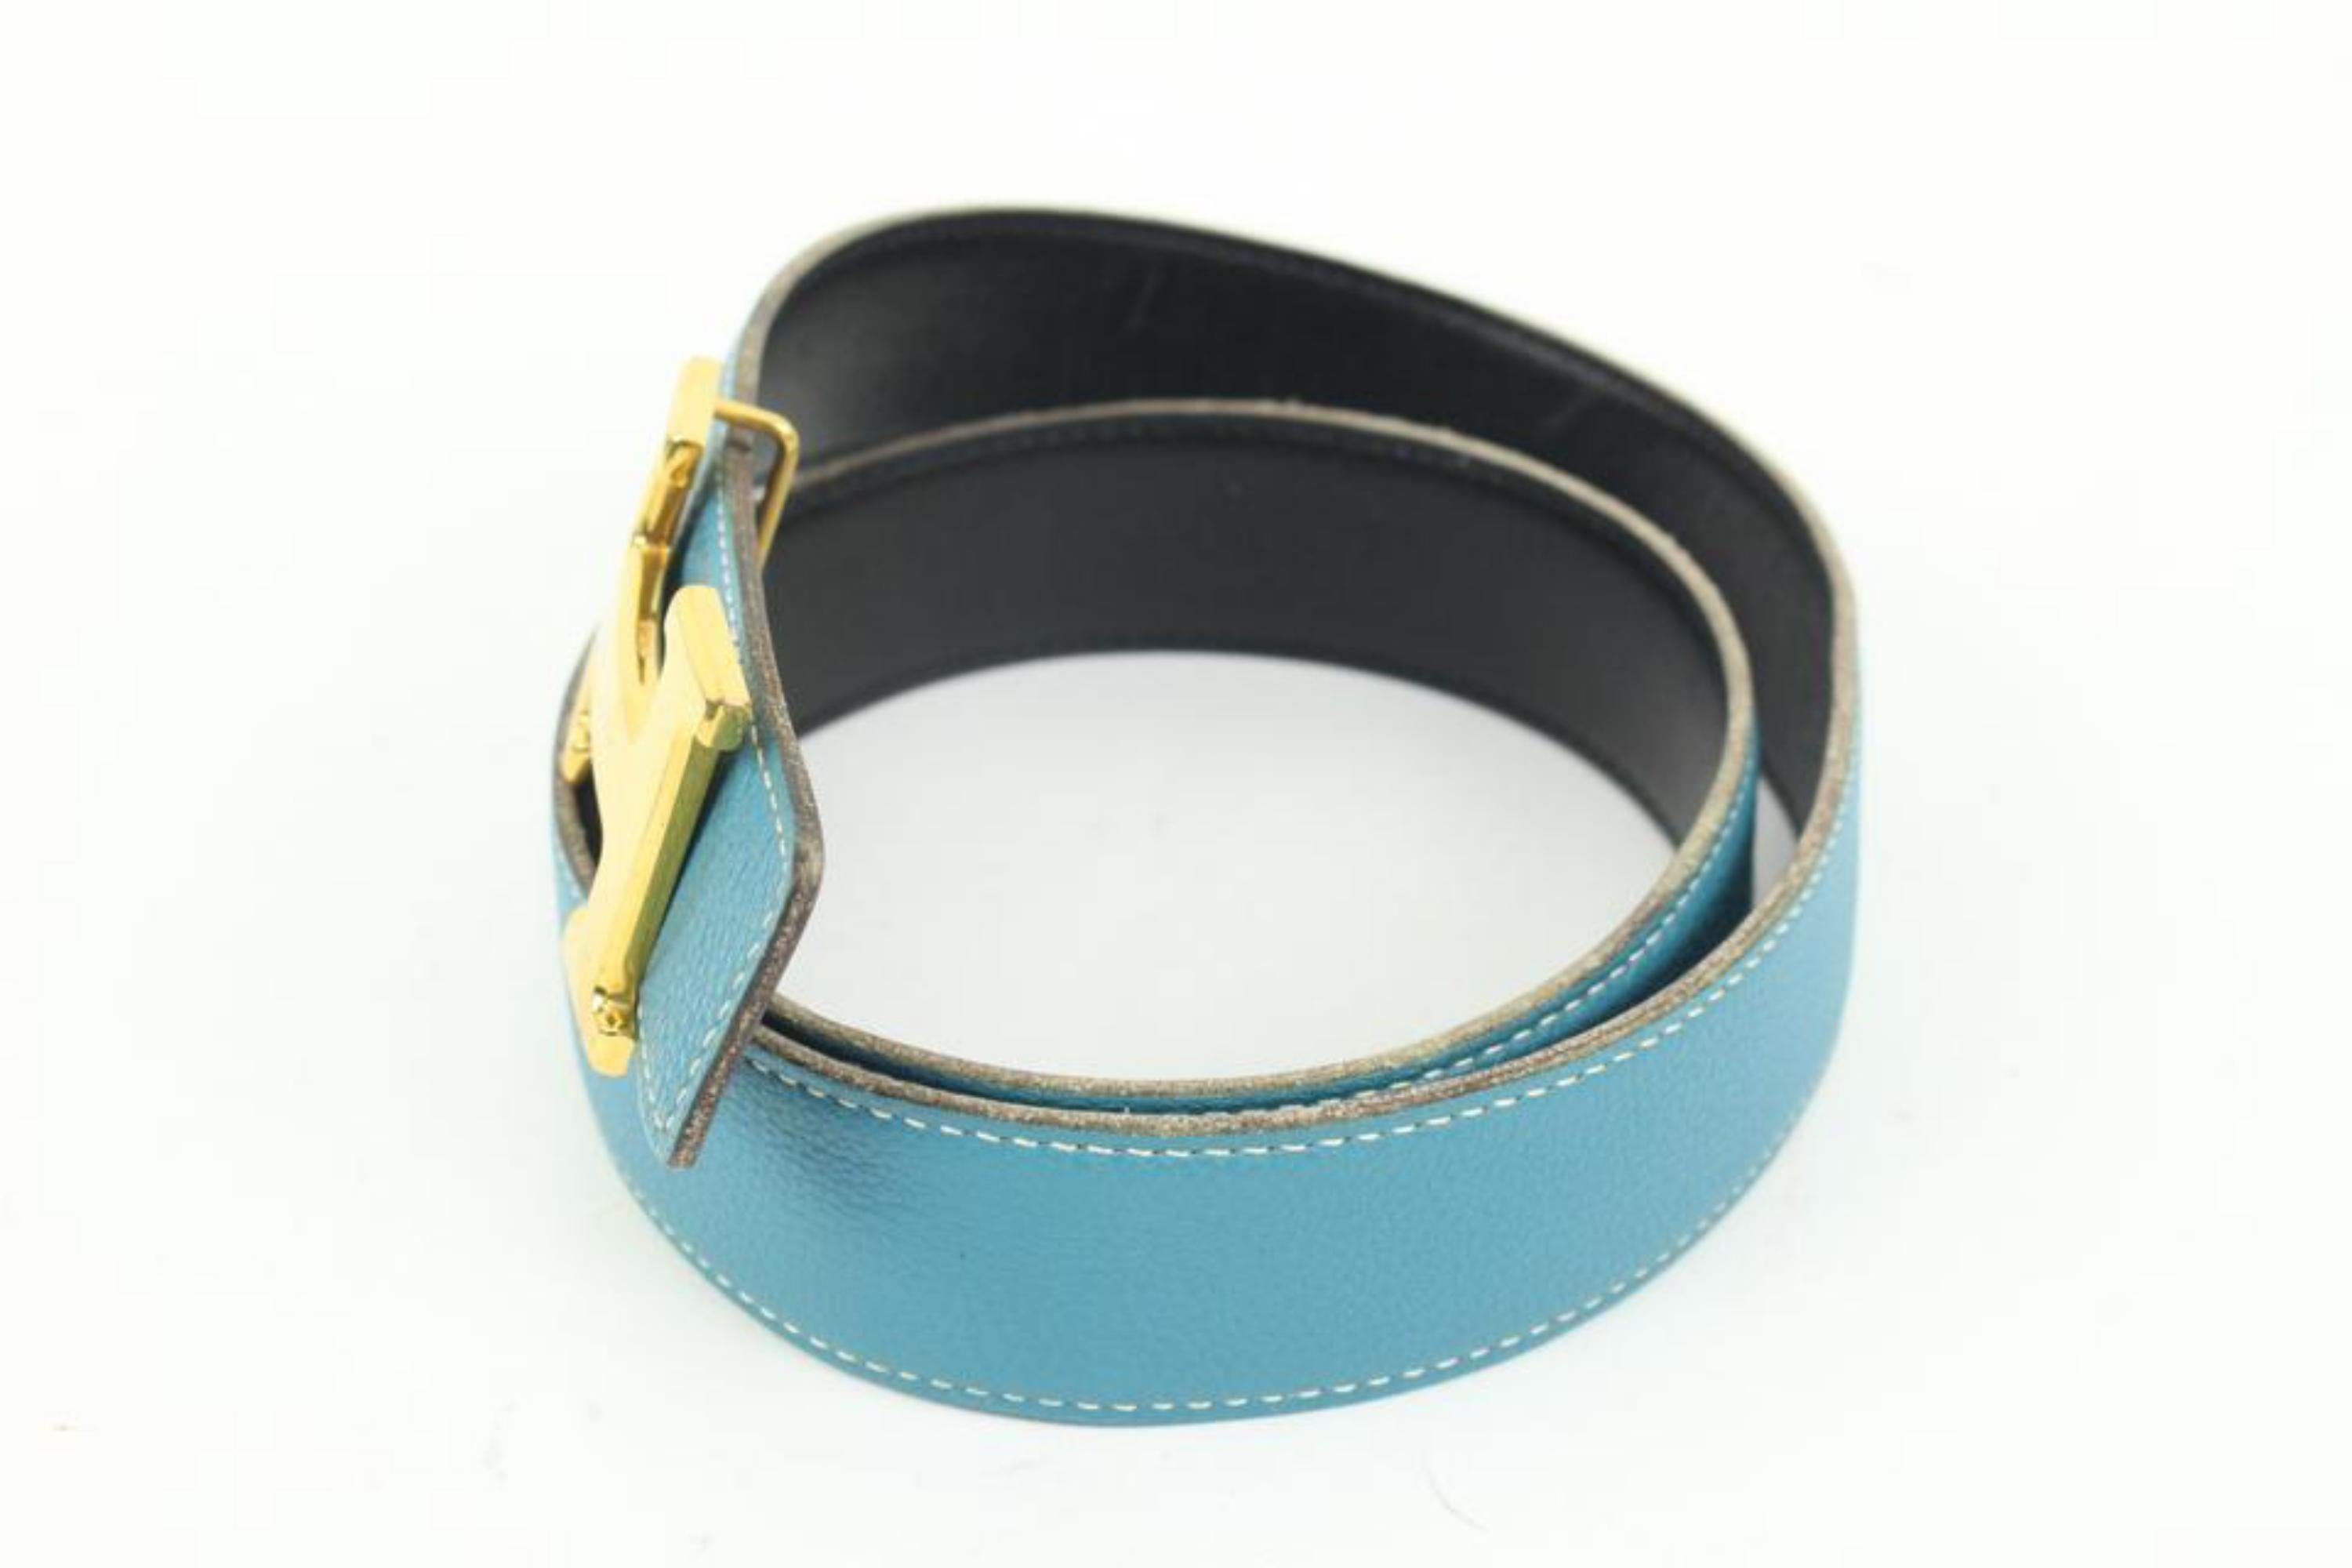 Kit ceinture logo H réversible 32 mm noir x bleu Jean x or 41h55 en vente 2